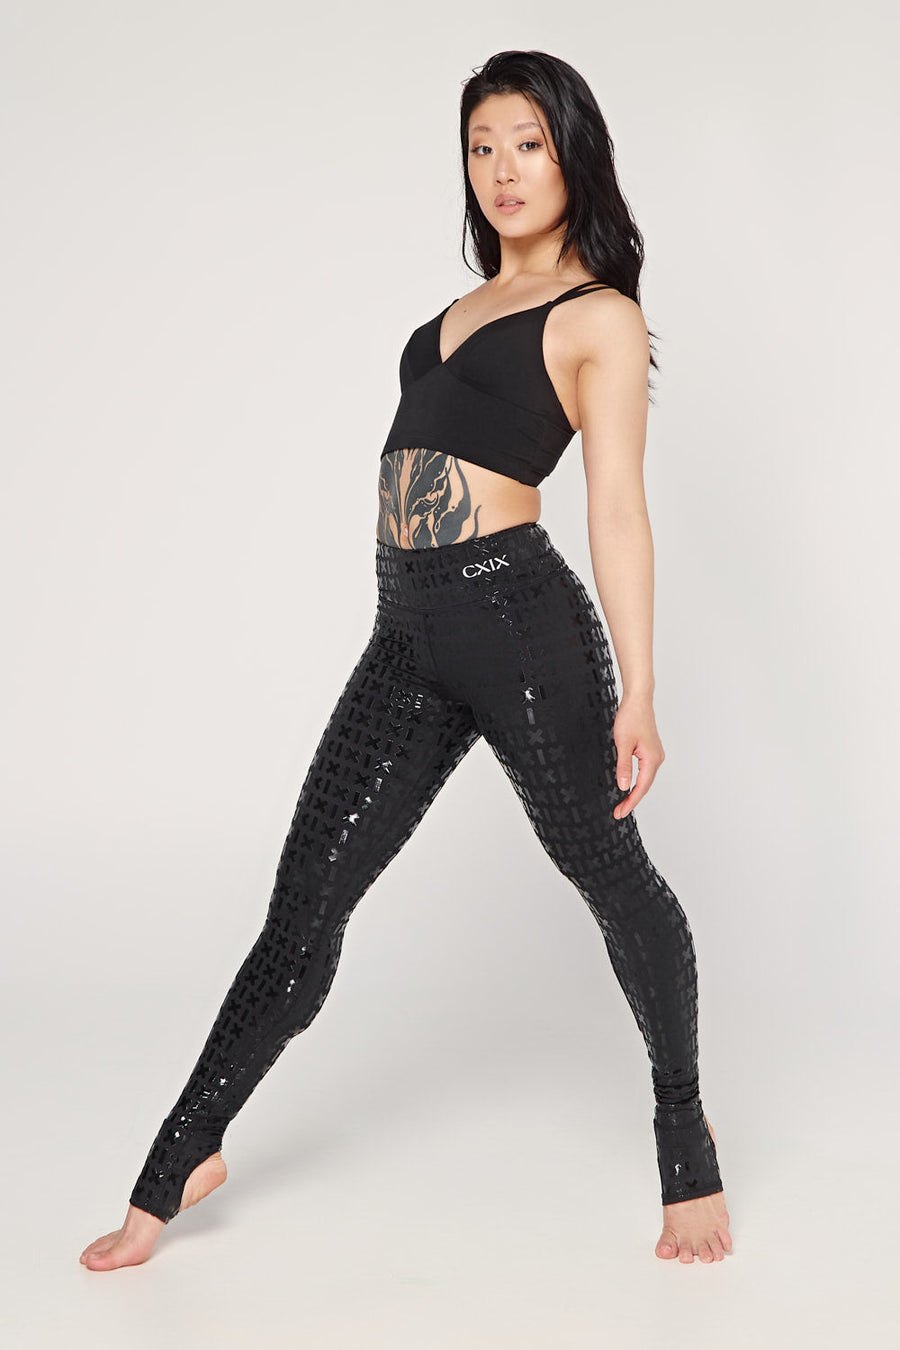 Felix Cane Unique Design Boot Cut Womens Fitness and Pole Dancing Yoga Pants